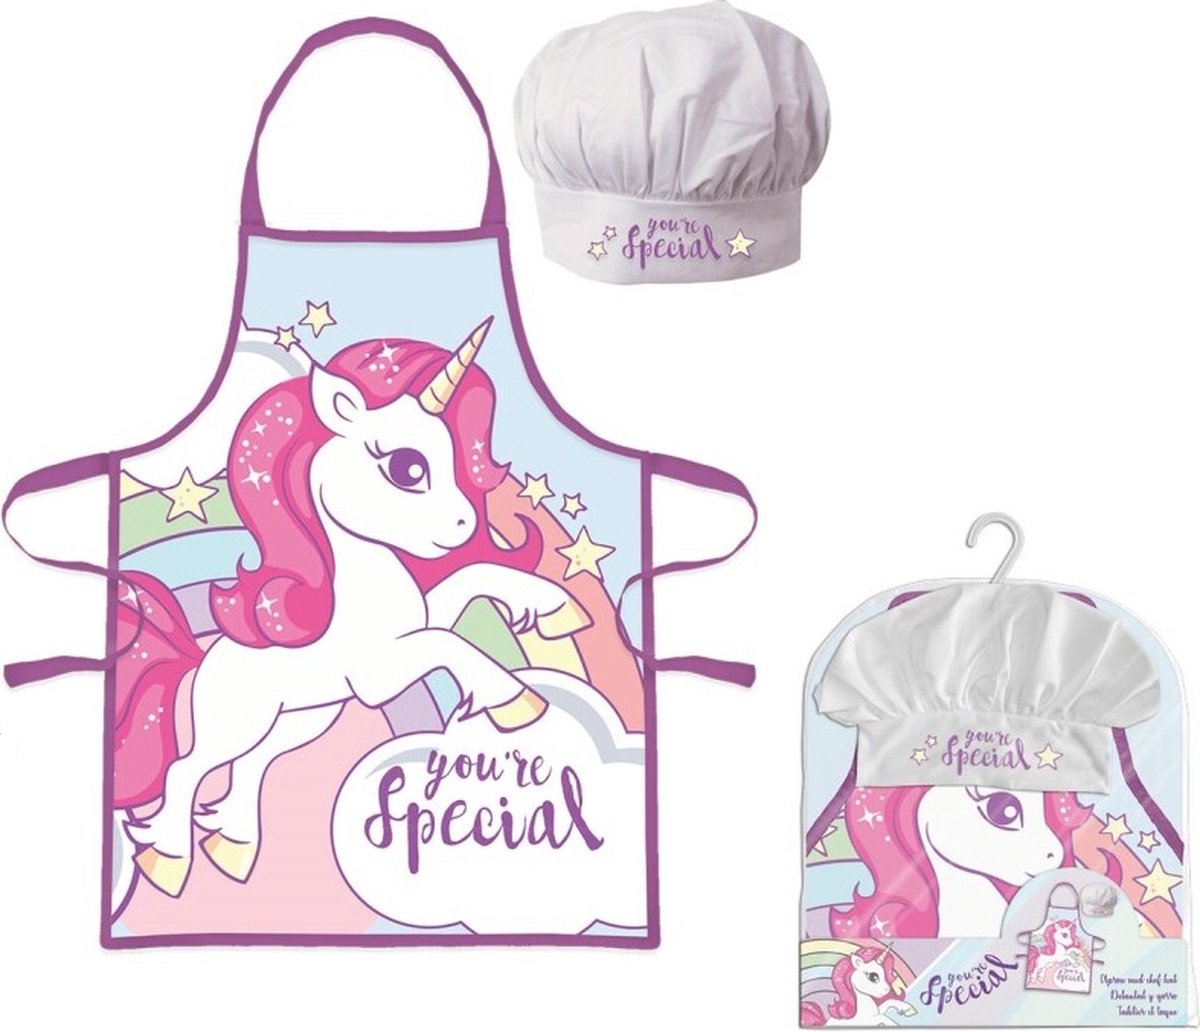 Children's apron with Unicorn